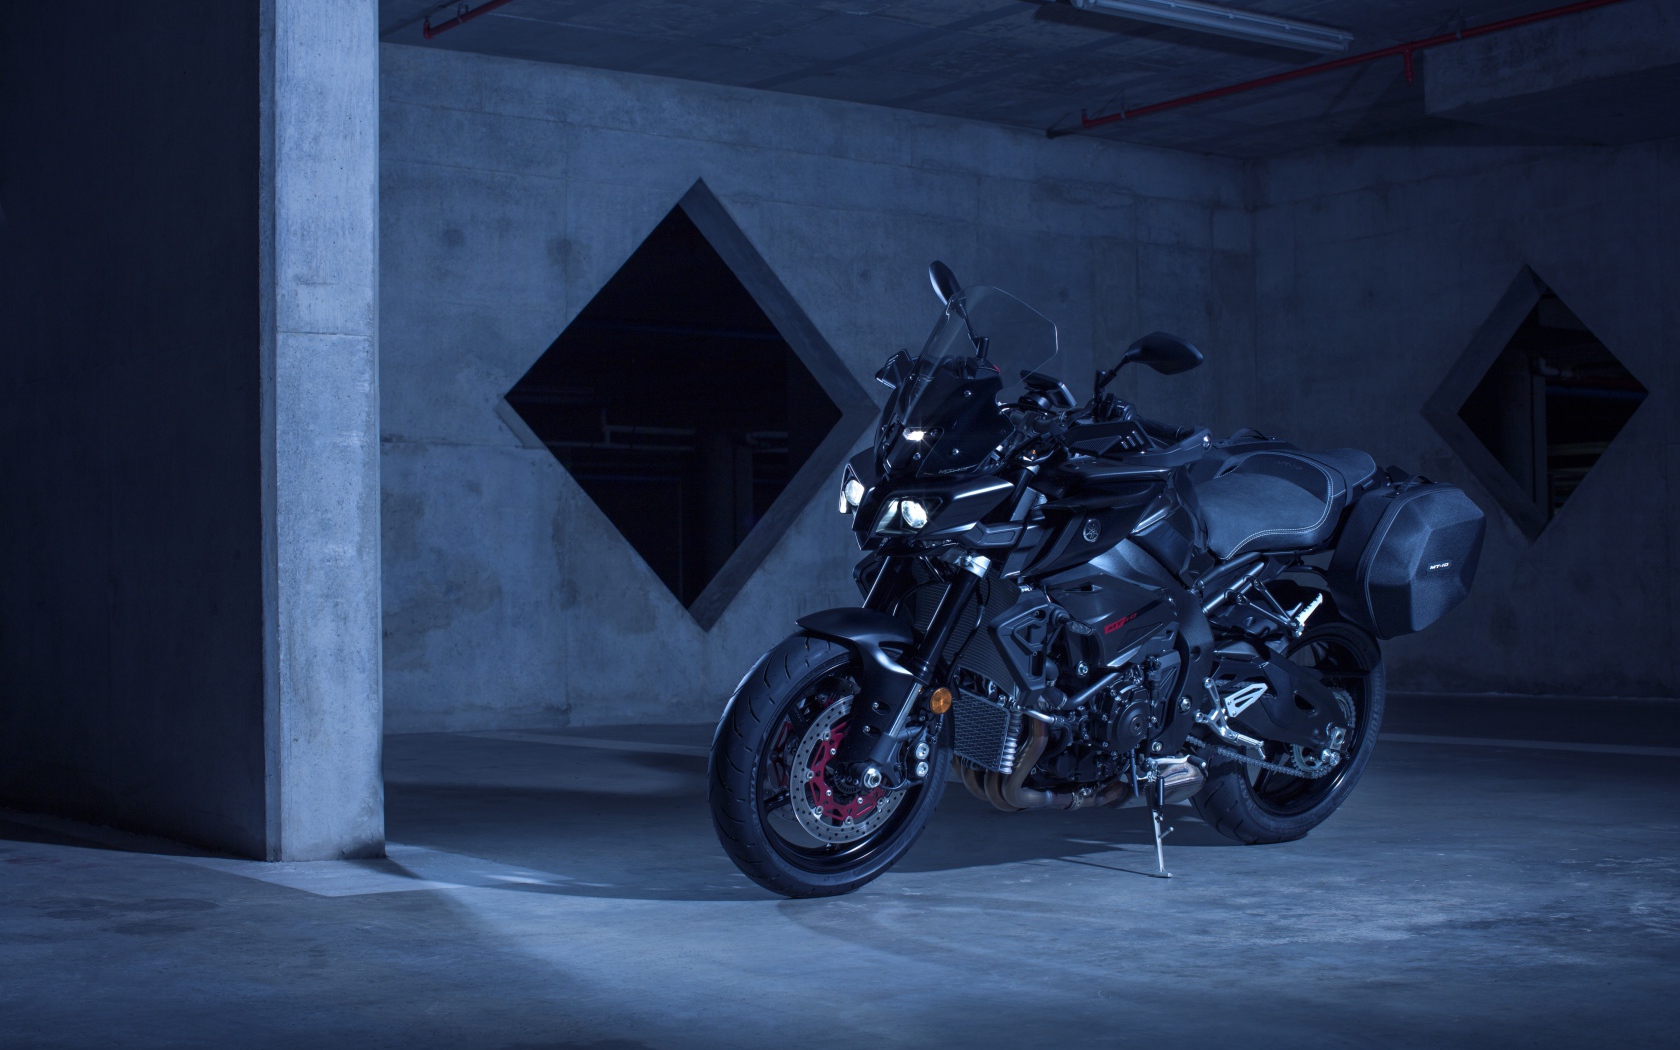 Motorcycle Yamaha MT-10 in the garage